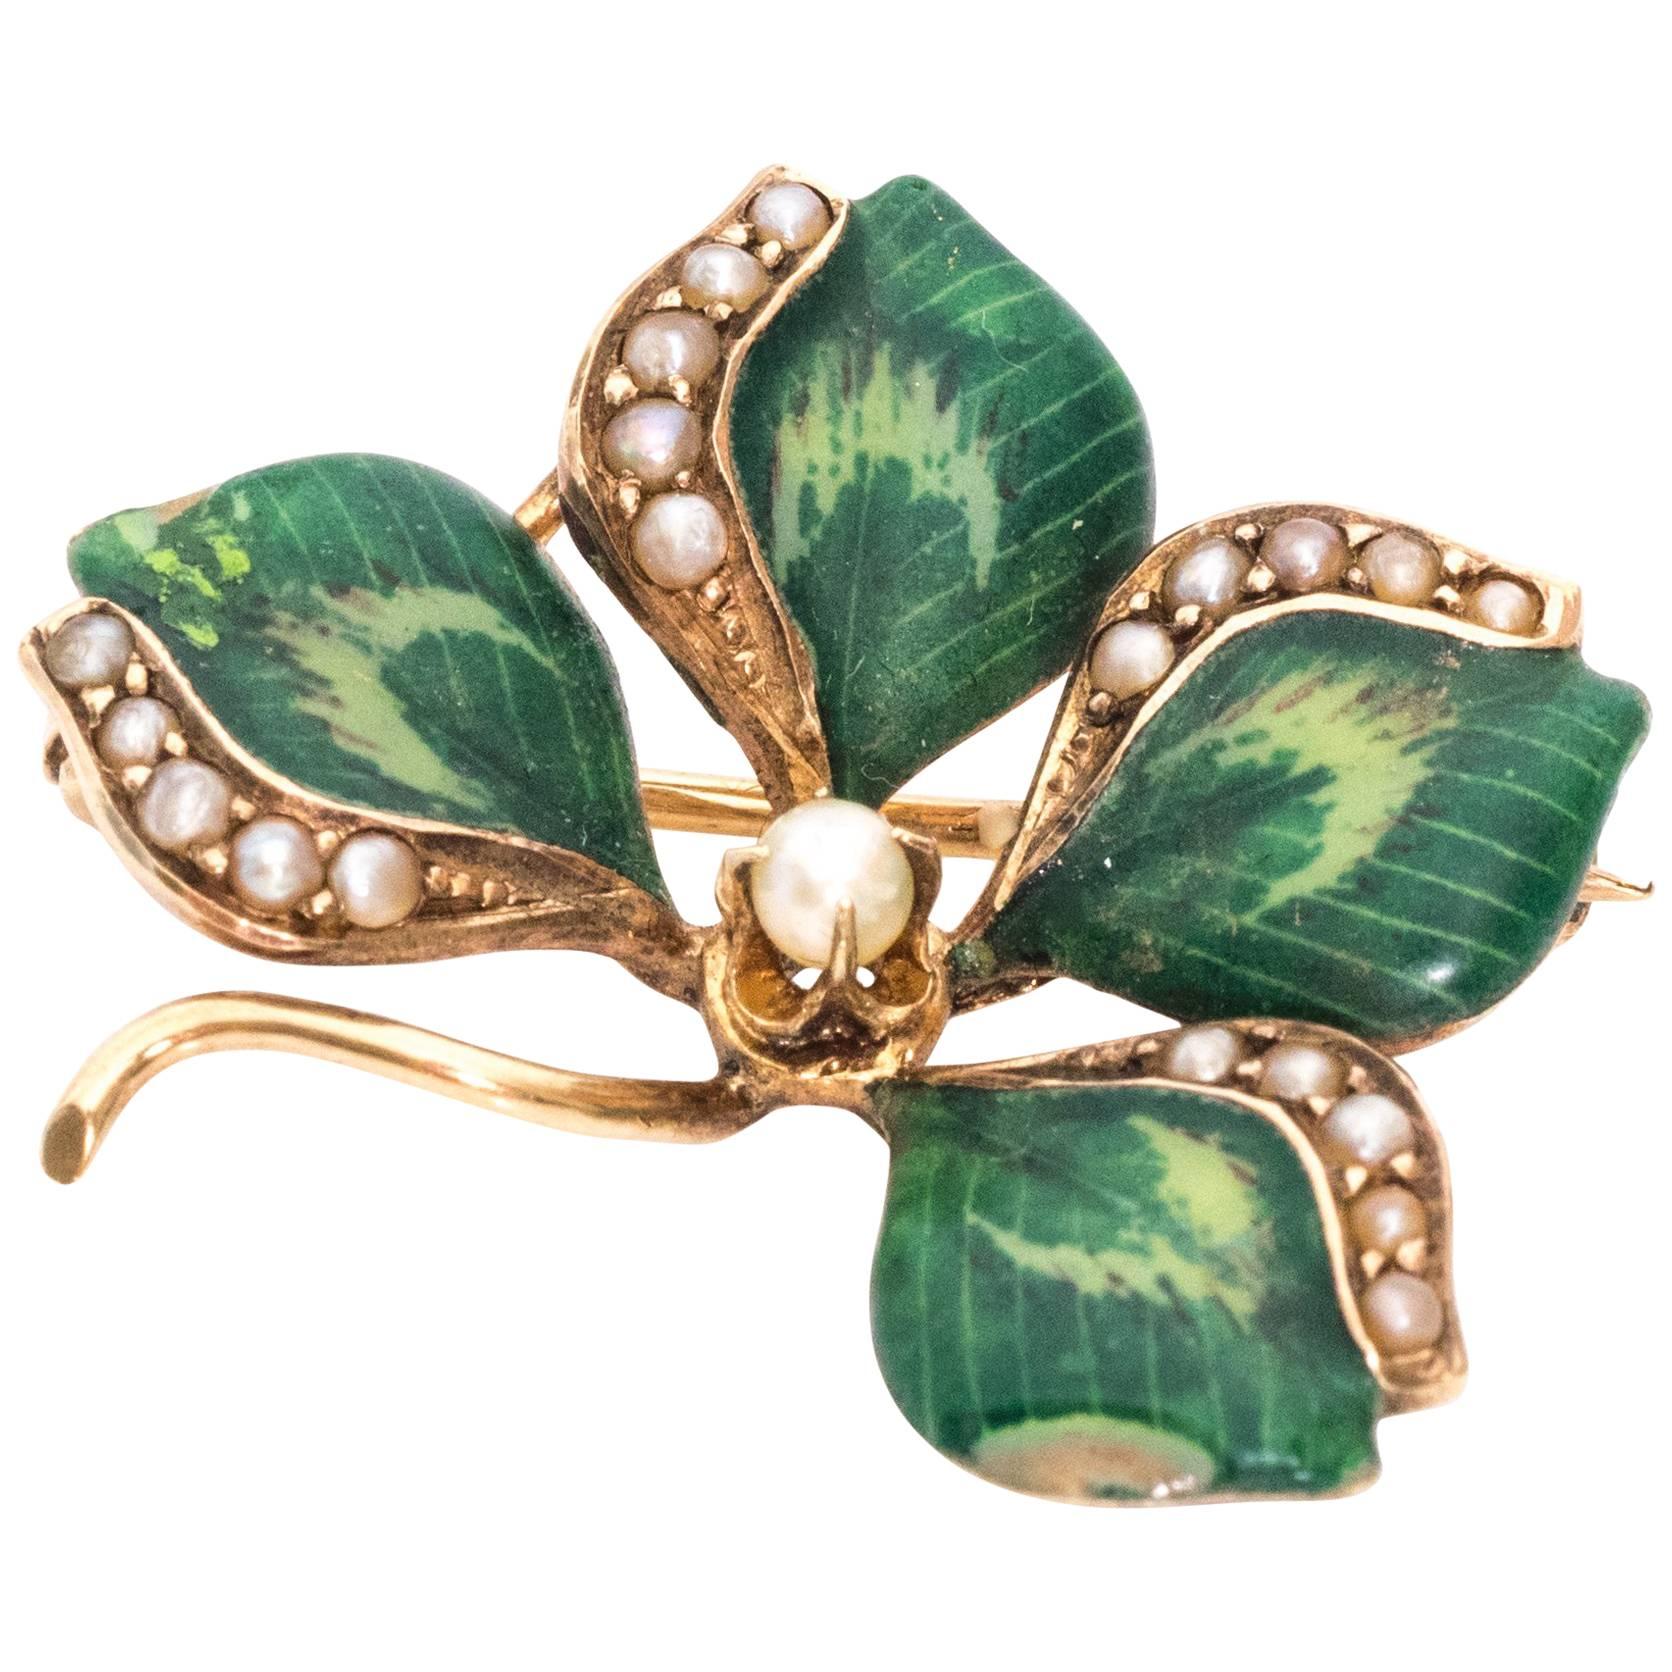 1890s Art Nouveau Four Leaf Clover Brooch, Gold, Enamel, Pearls